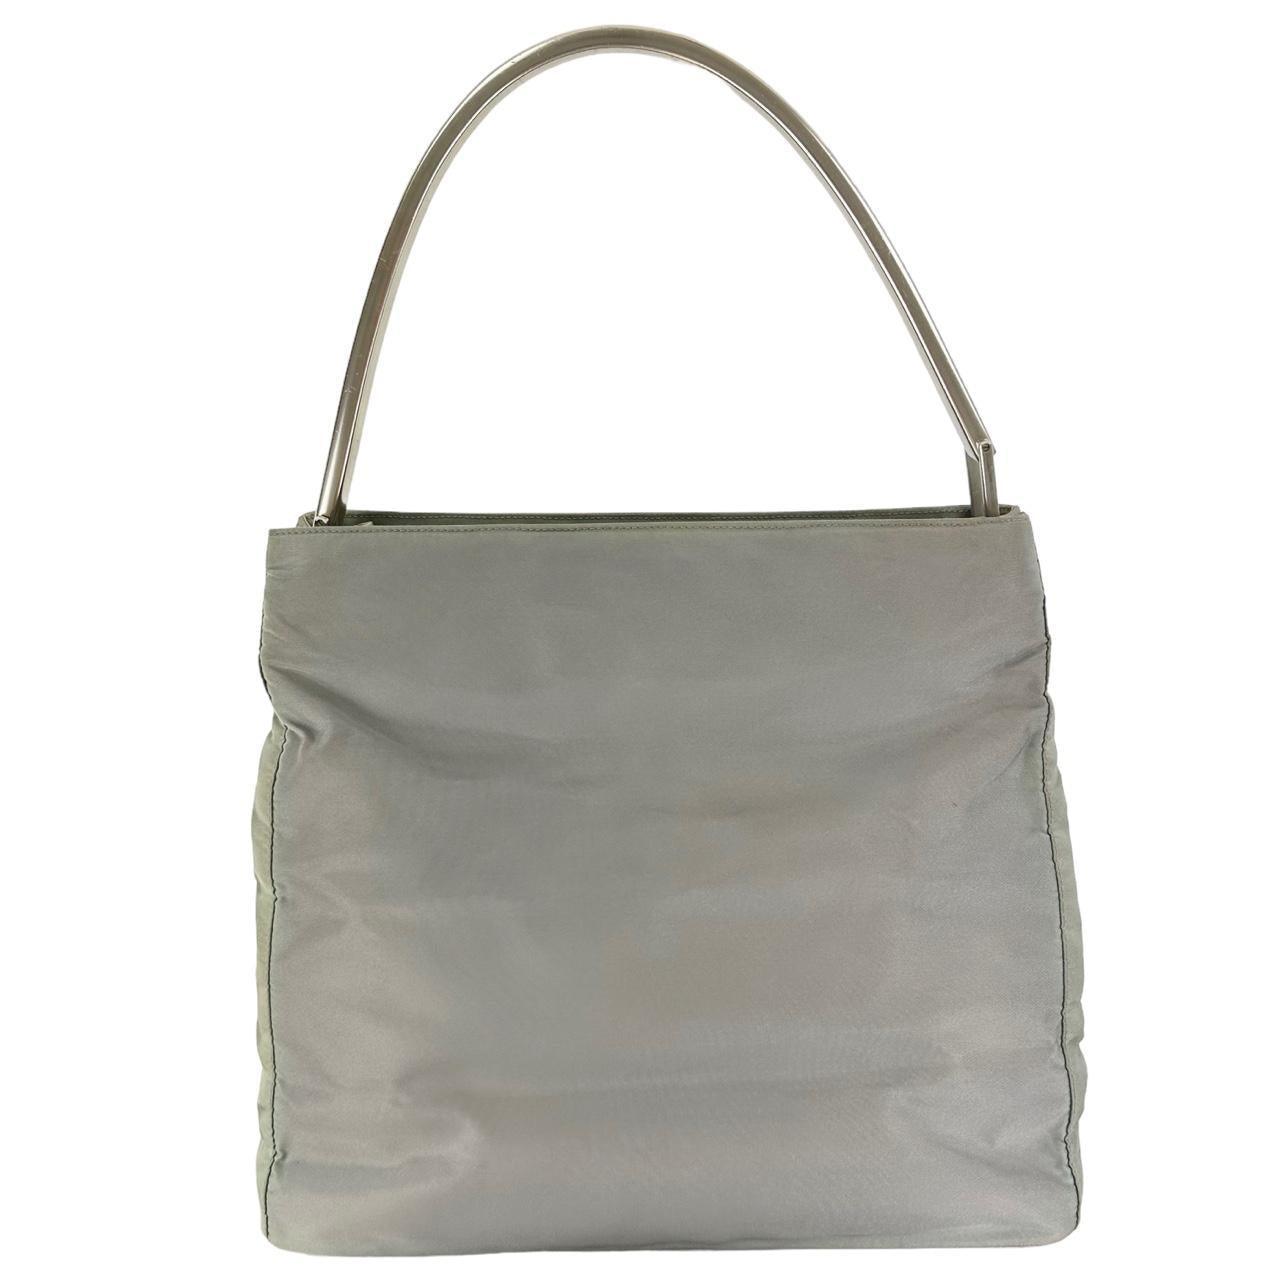 Vintage Prada Nylon Shoulder Bag - Known Source